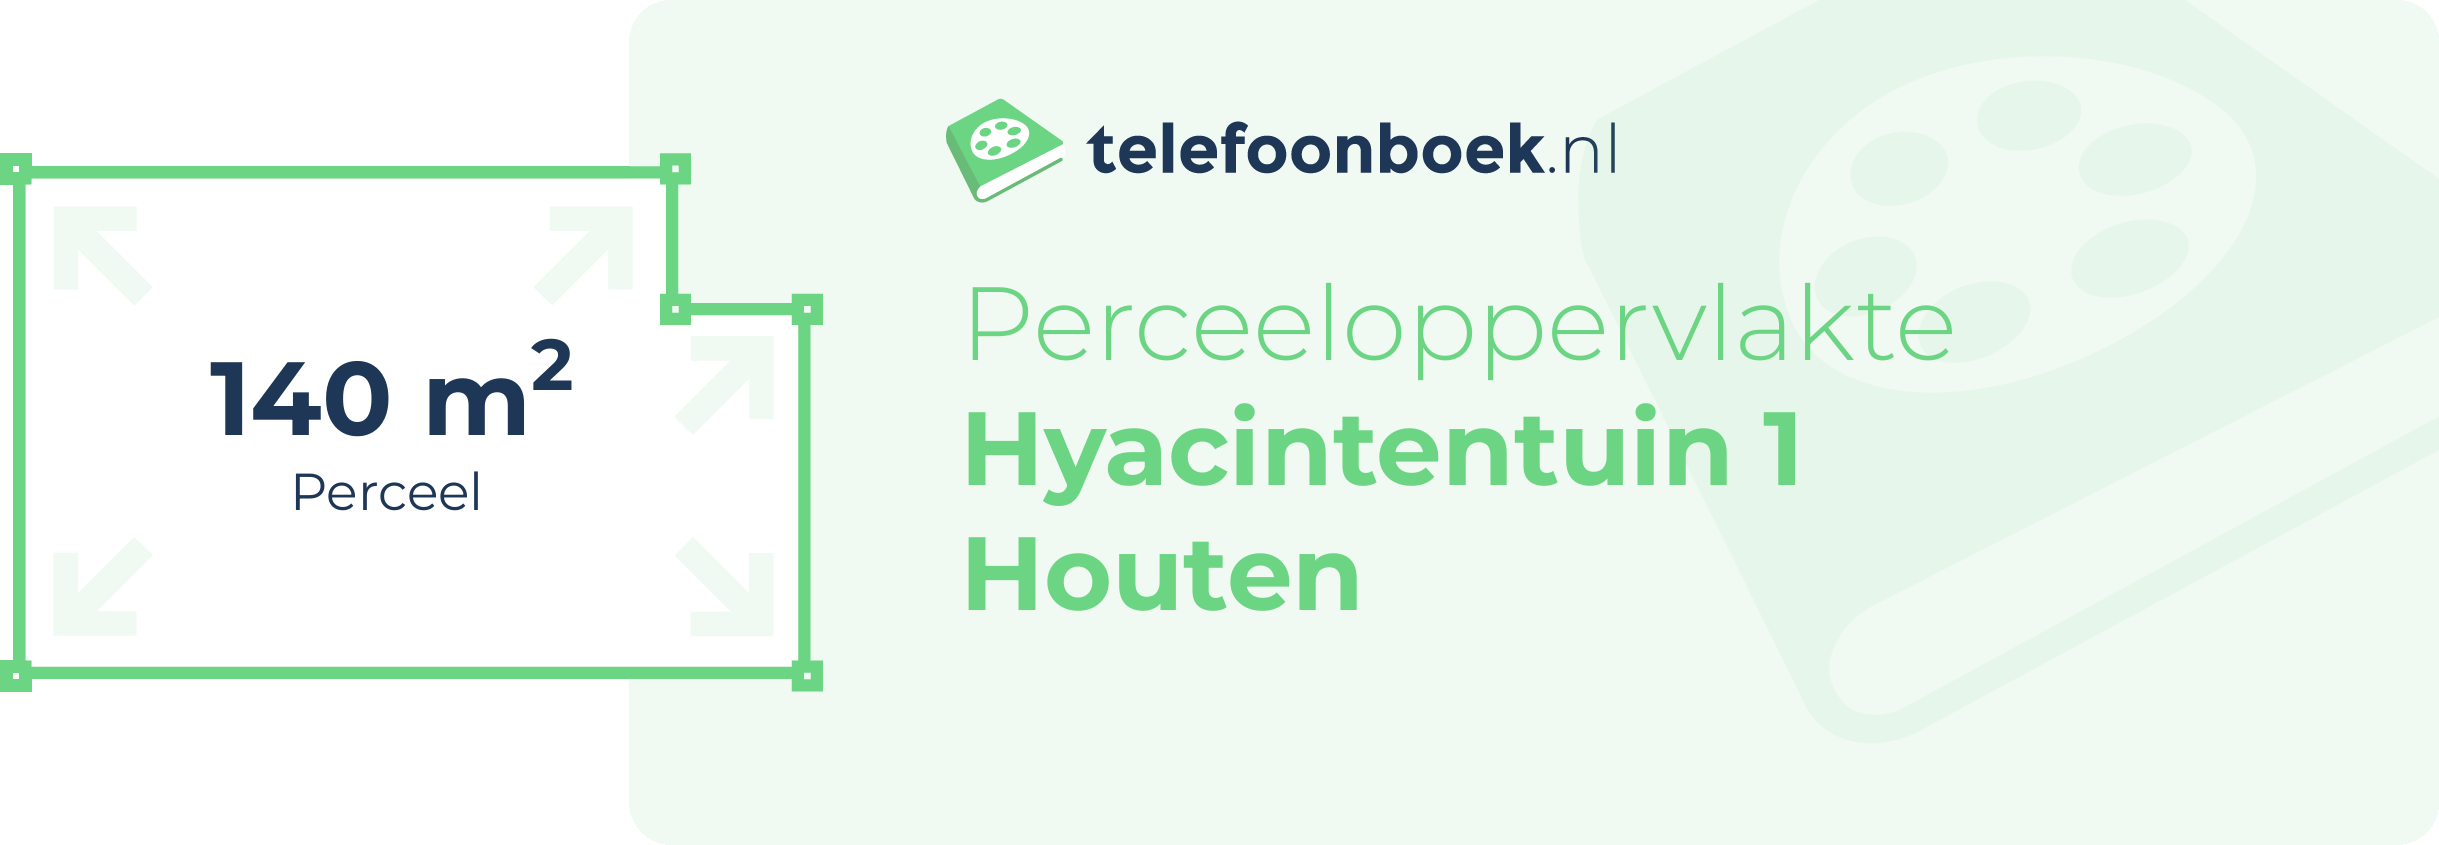 Perceeloppervlakte Hyacintentuin 1 Houten